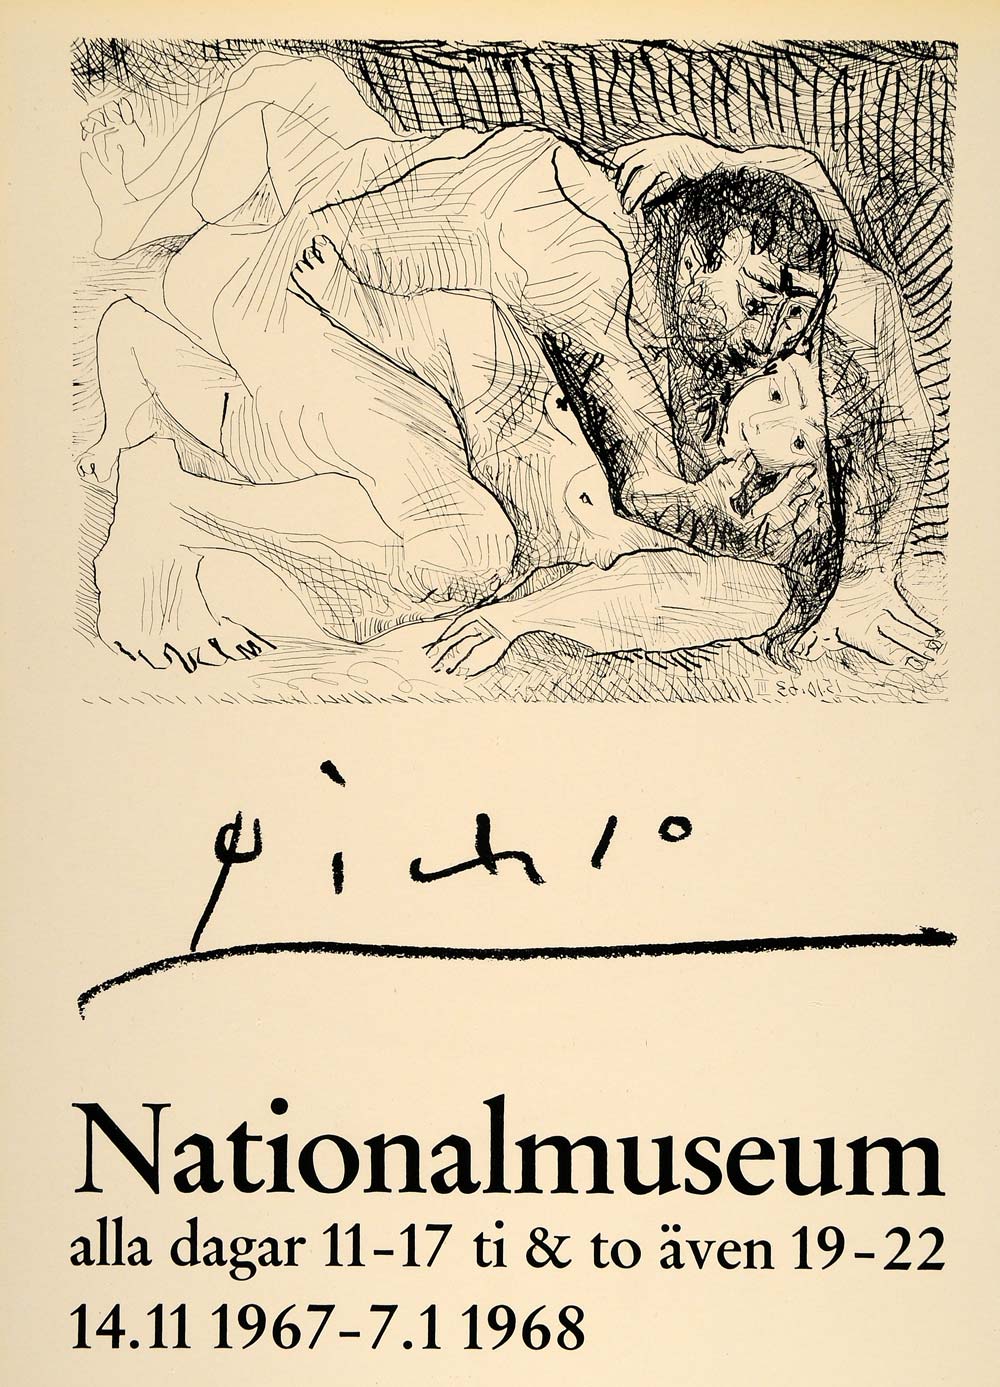 1971 Print Picasso Lovers Nationalmuseum Stockholm - ORIGINAL PIC3